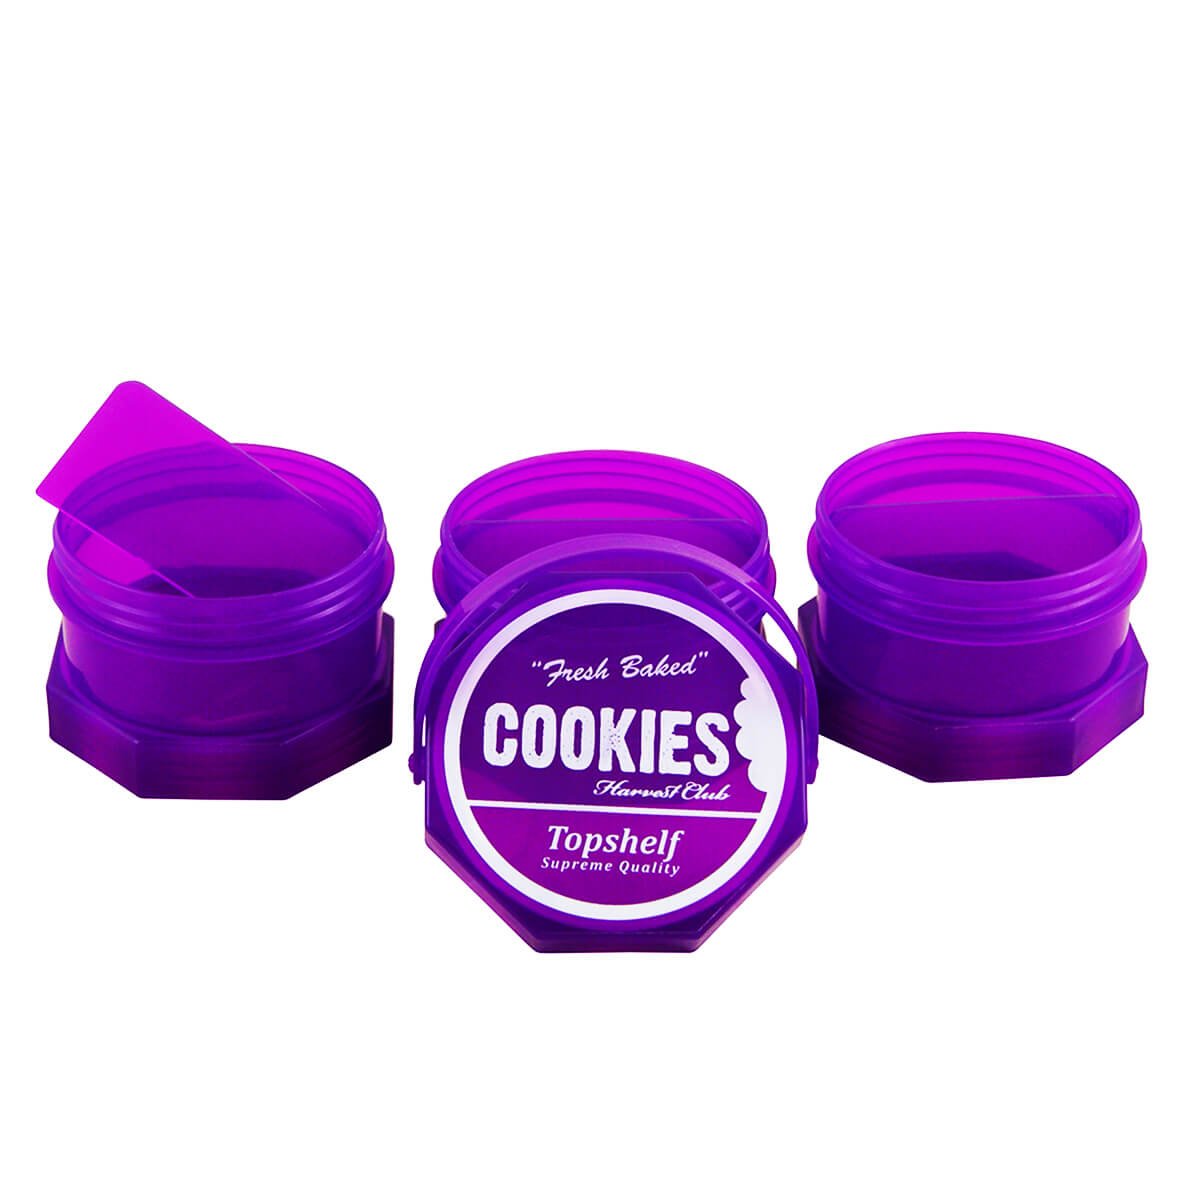 https://d30qj4y22qnbc7.cloudfront.net/wp-content/uploads/2020/10/wholesale-cookies-purple-stacked-plastic-containers-2.jpg